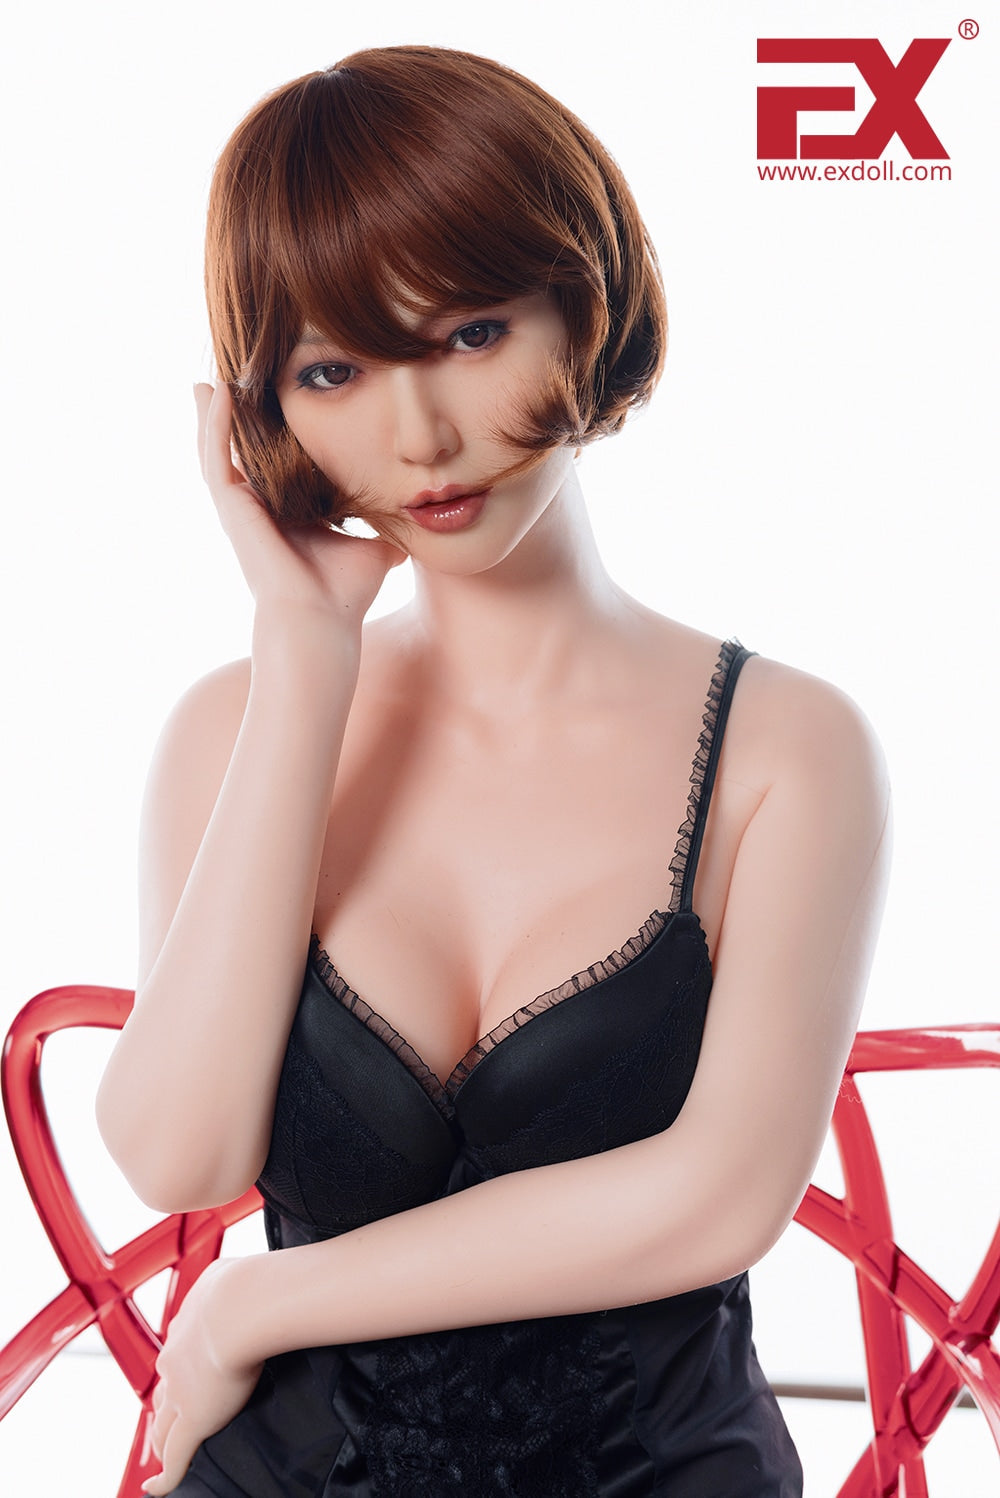 EX Doll Ukiyoe Series 170 cm Silicone - Yutsuki | Sex Dolls SG